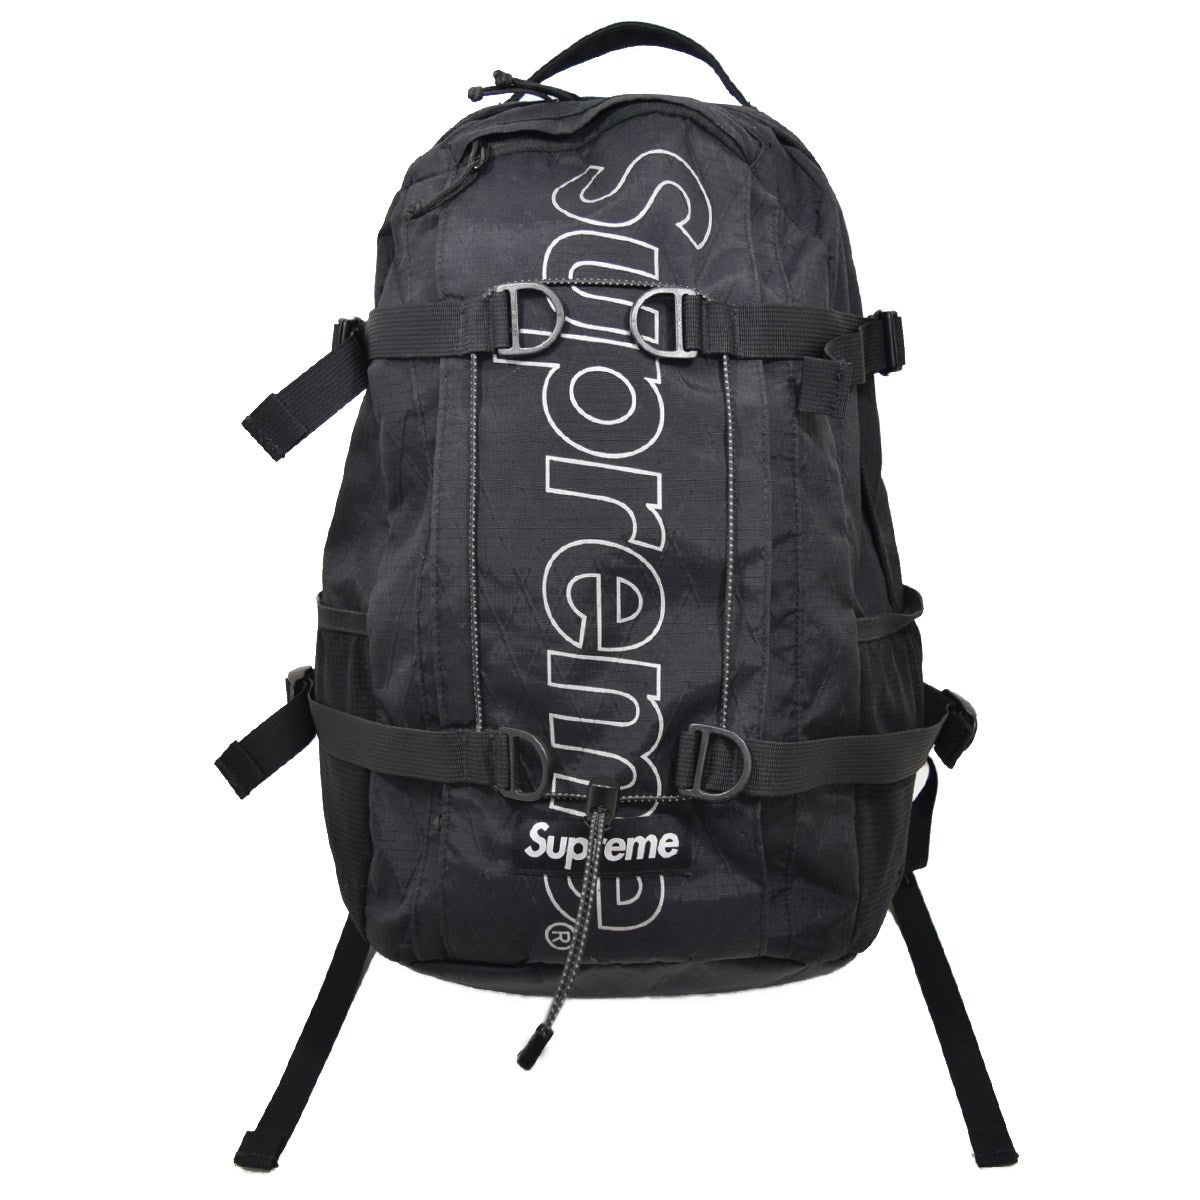 SUPREME(シュプリーム) Backpack ロゴ バックパック リュック 2018AW 